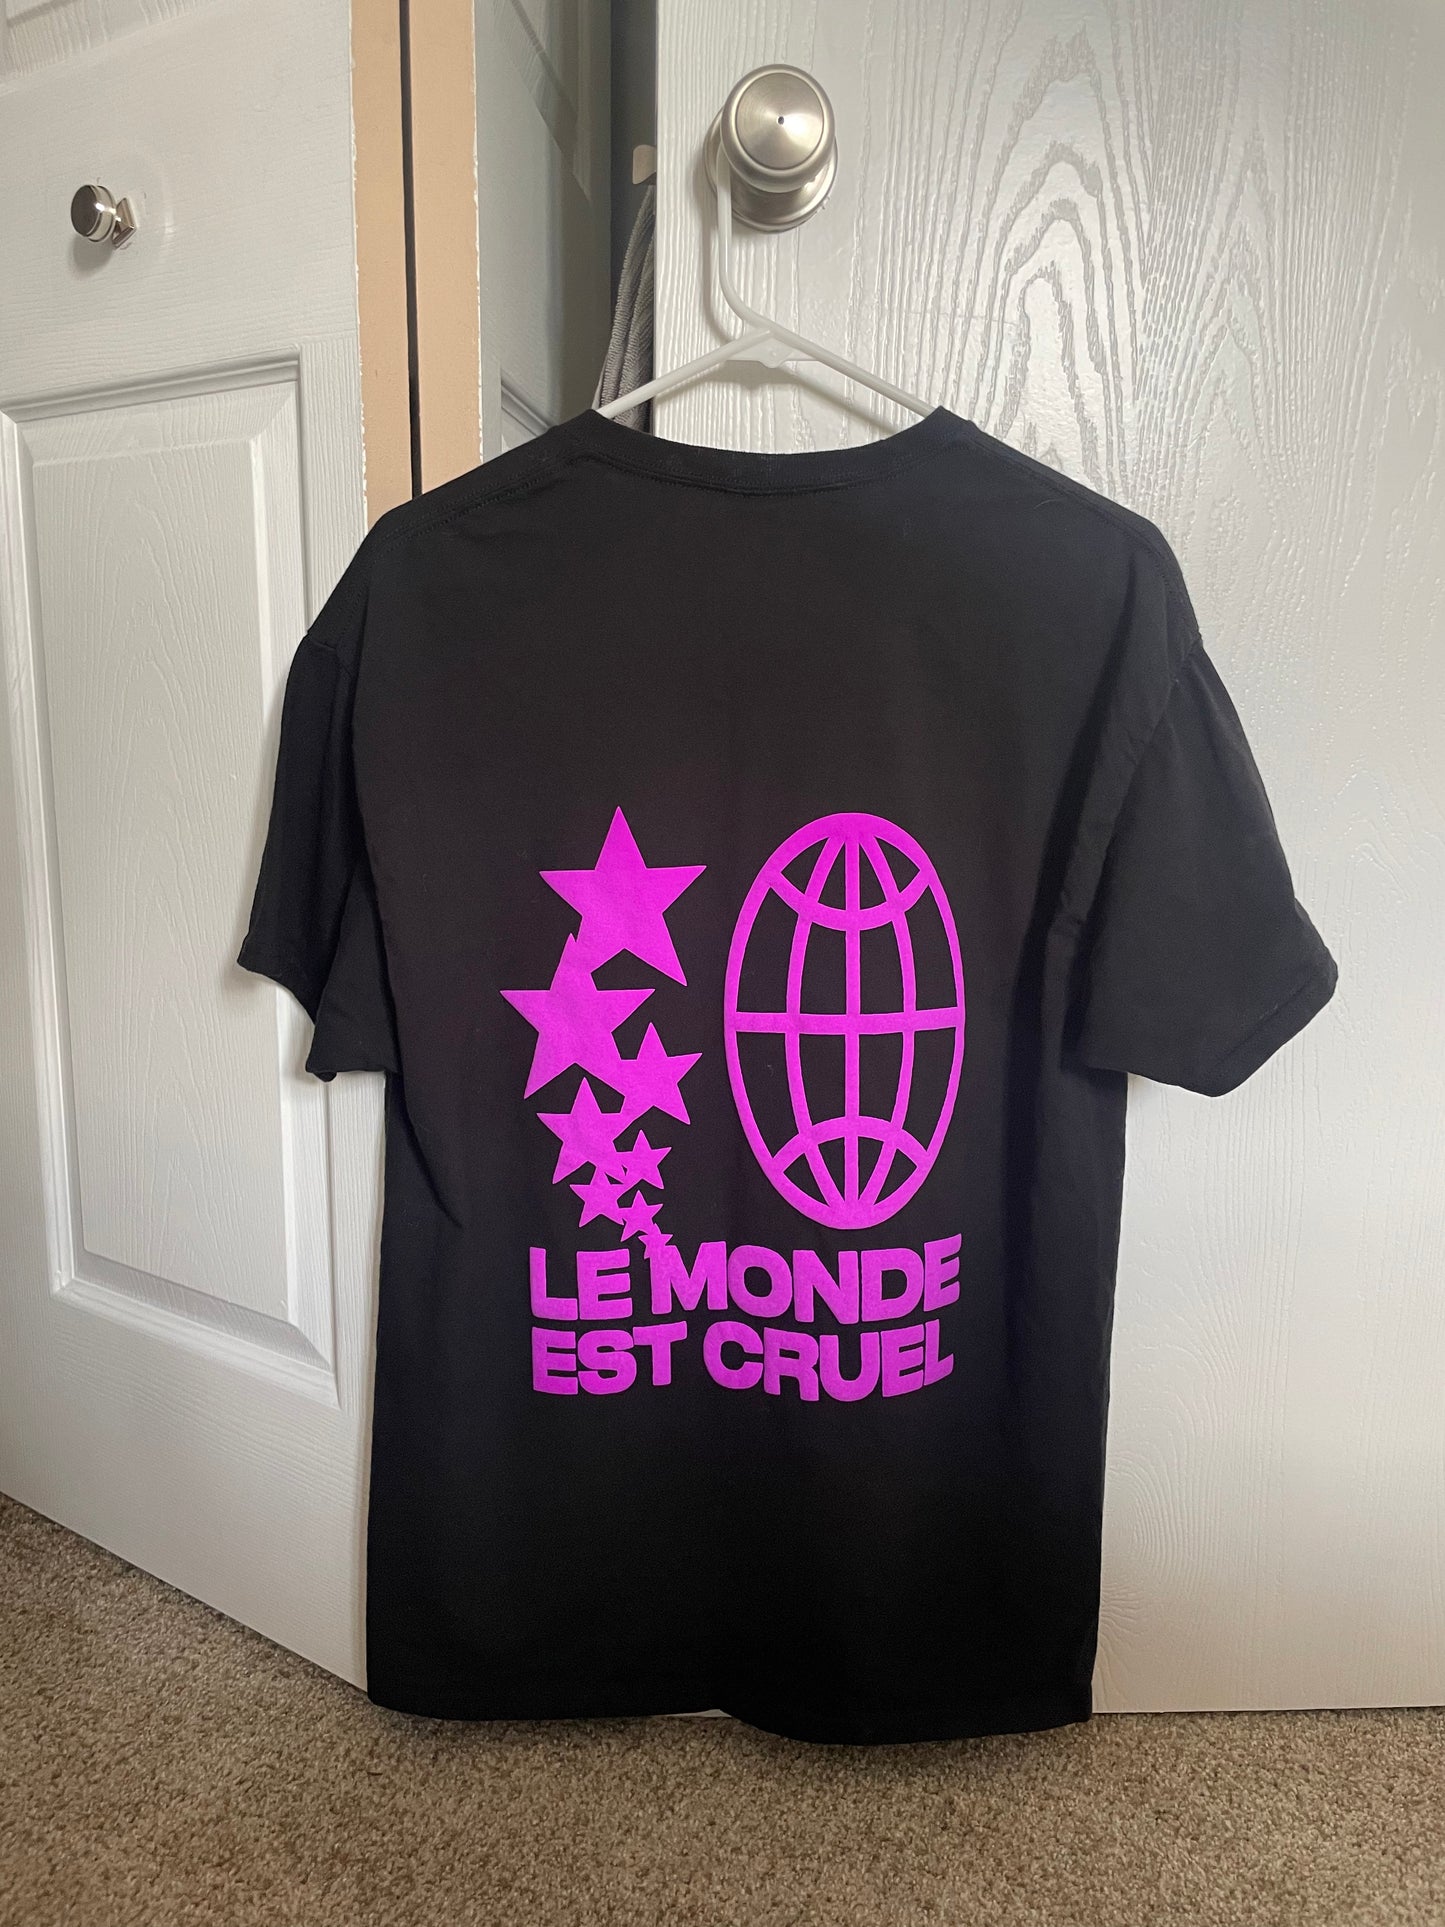 Le monde est cruel T-Shirt